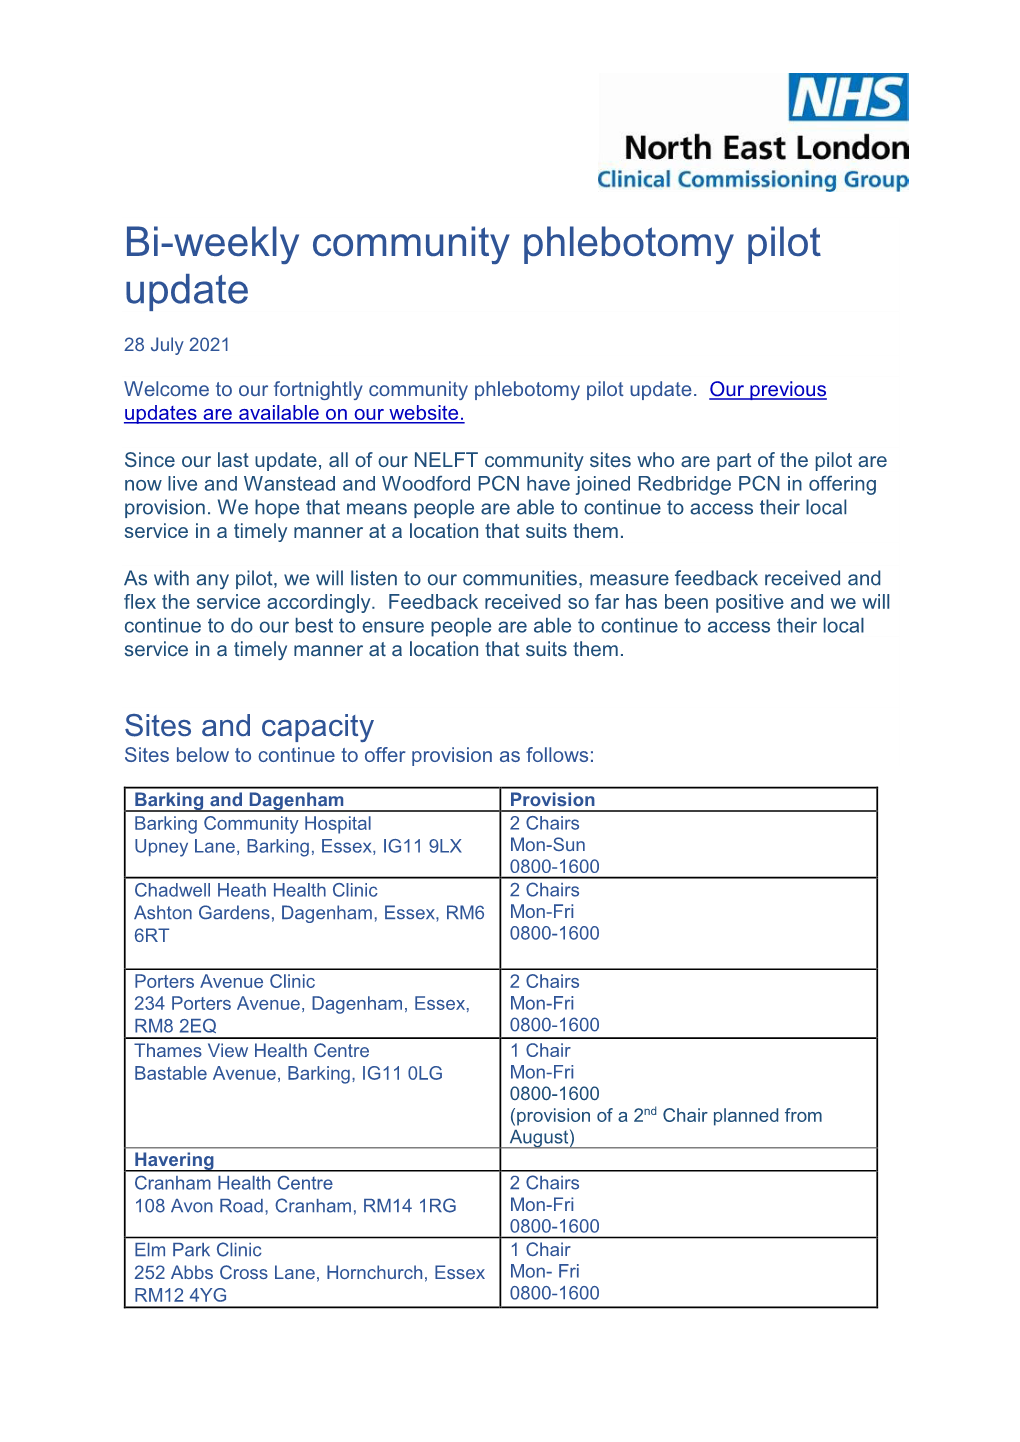 Bi-Weekly Community Phlebotomy Pilot Update